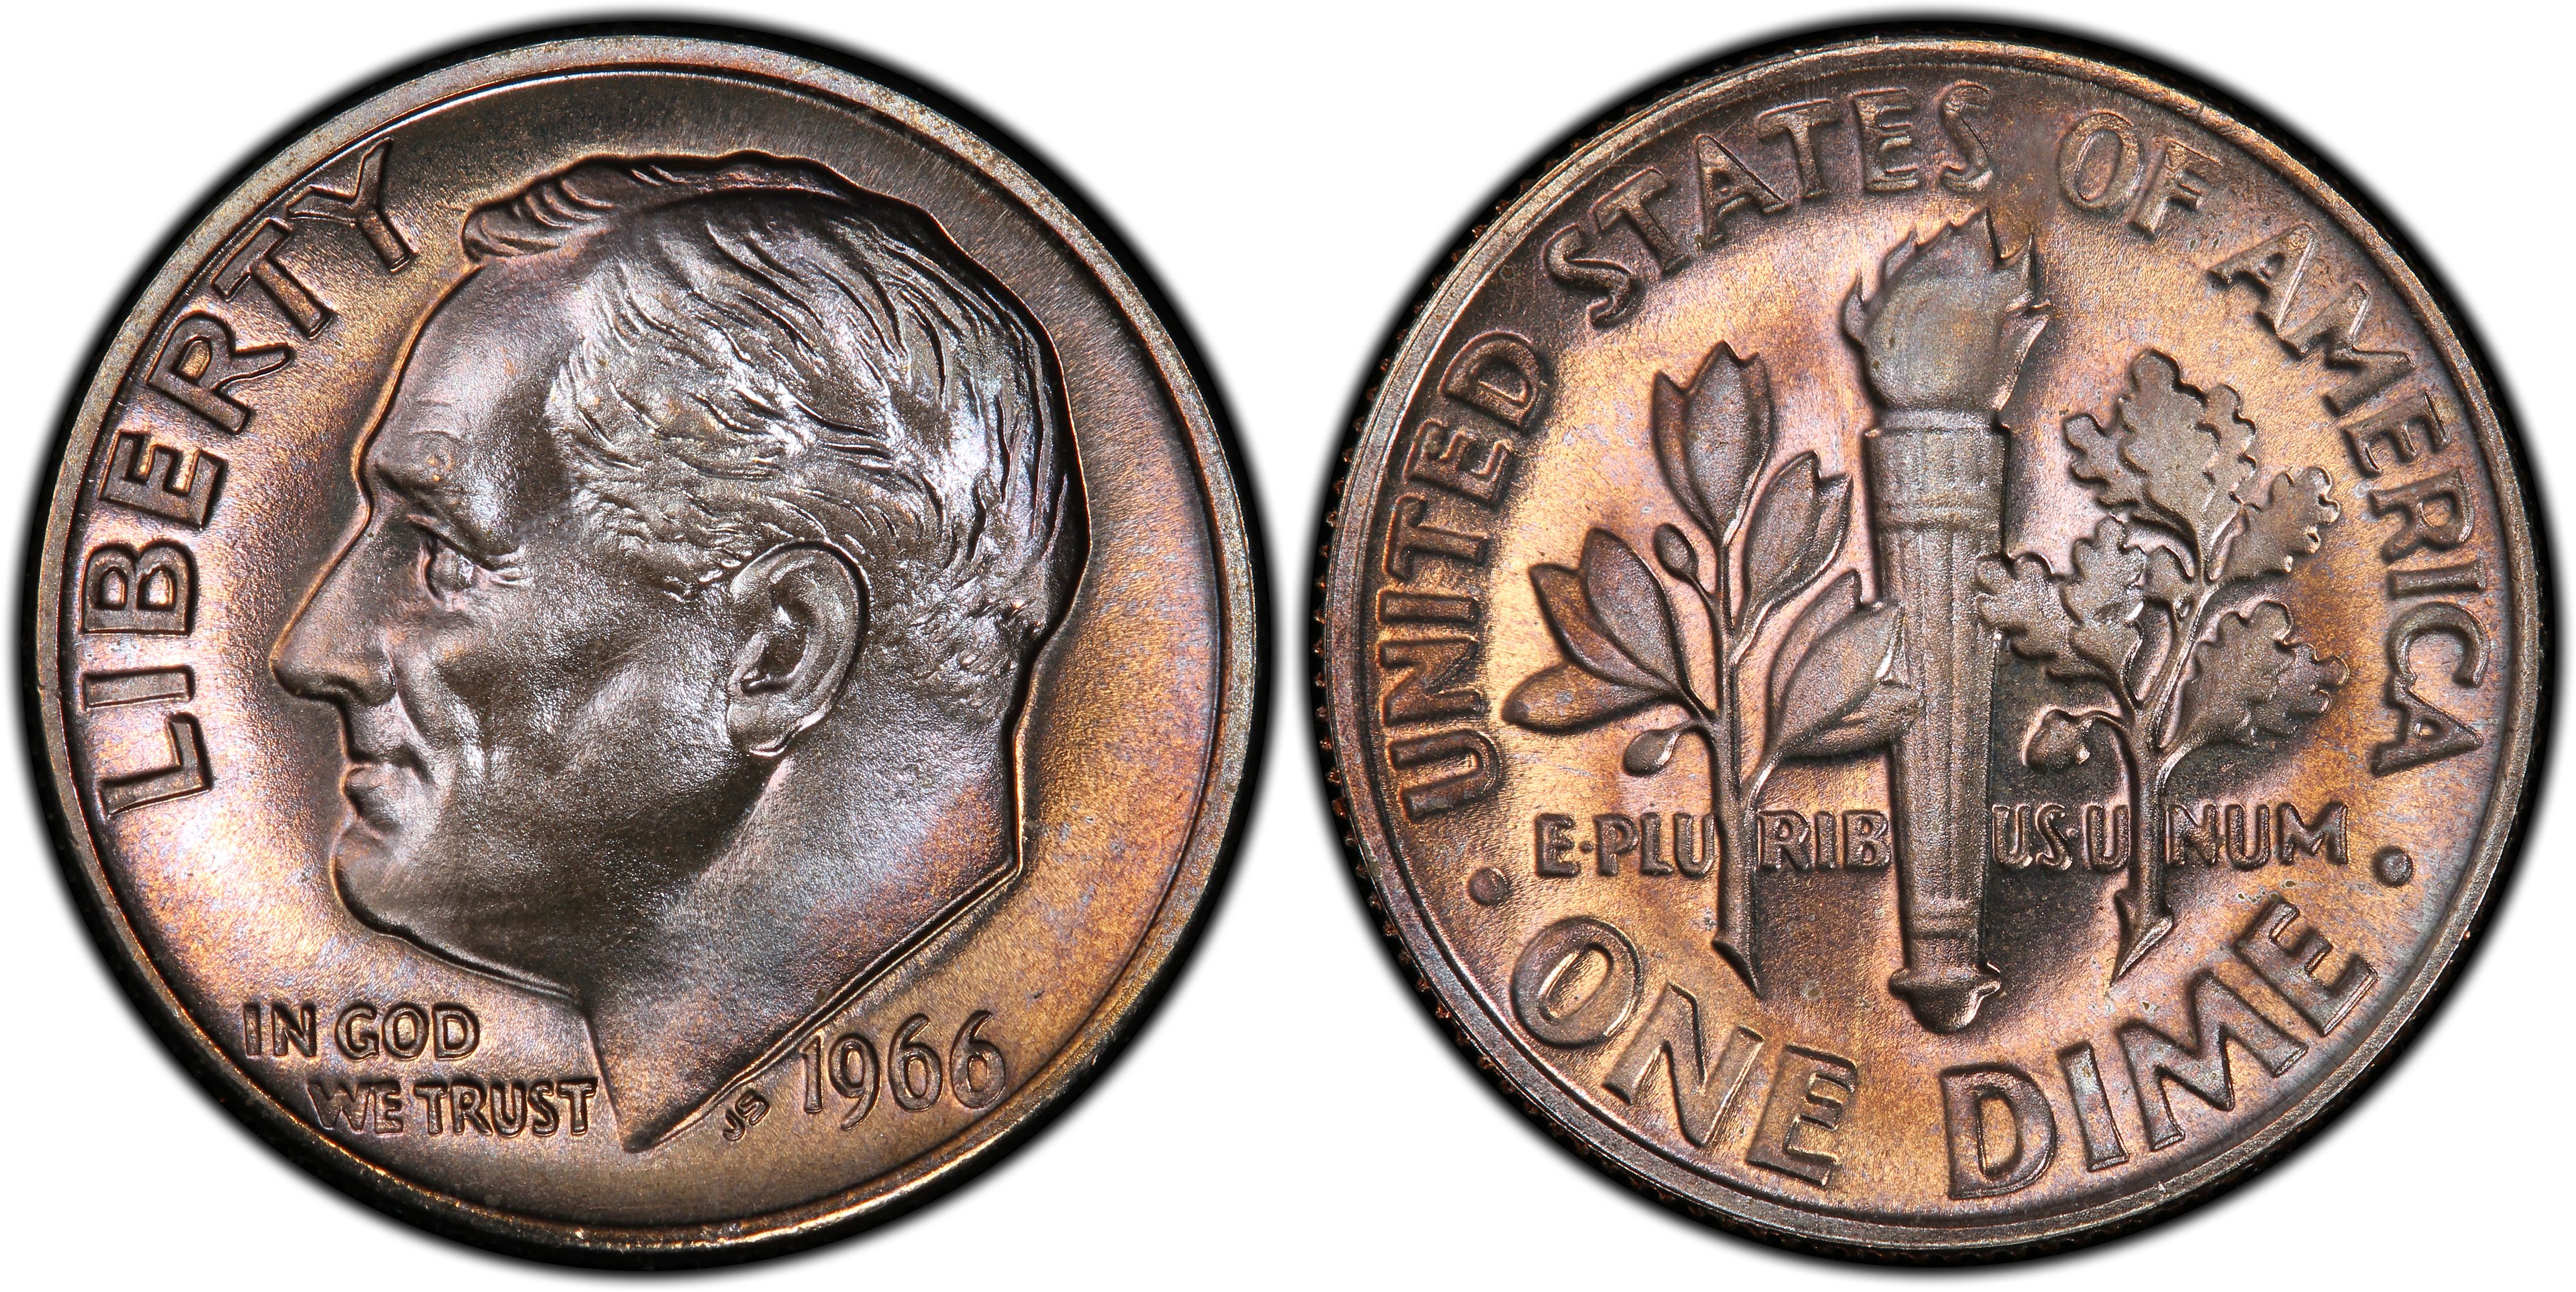 1965 1966 1967 SMS Roosevelt Dime 3 Coin Set. 